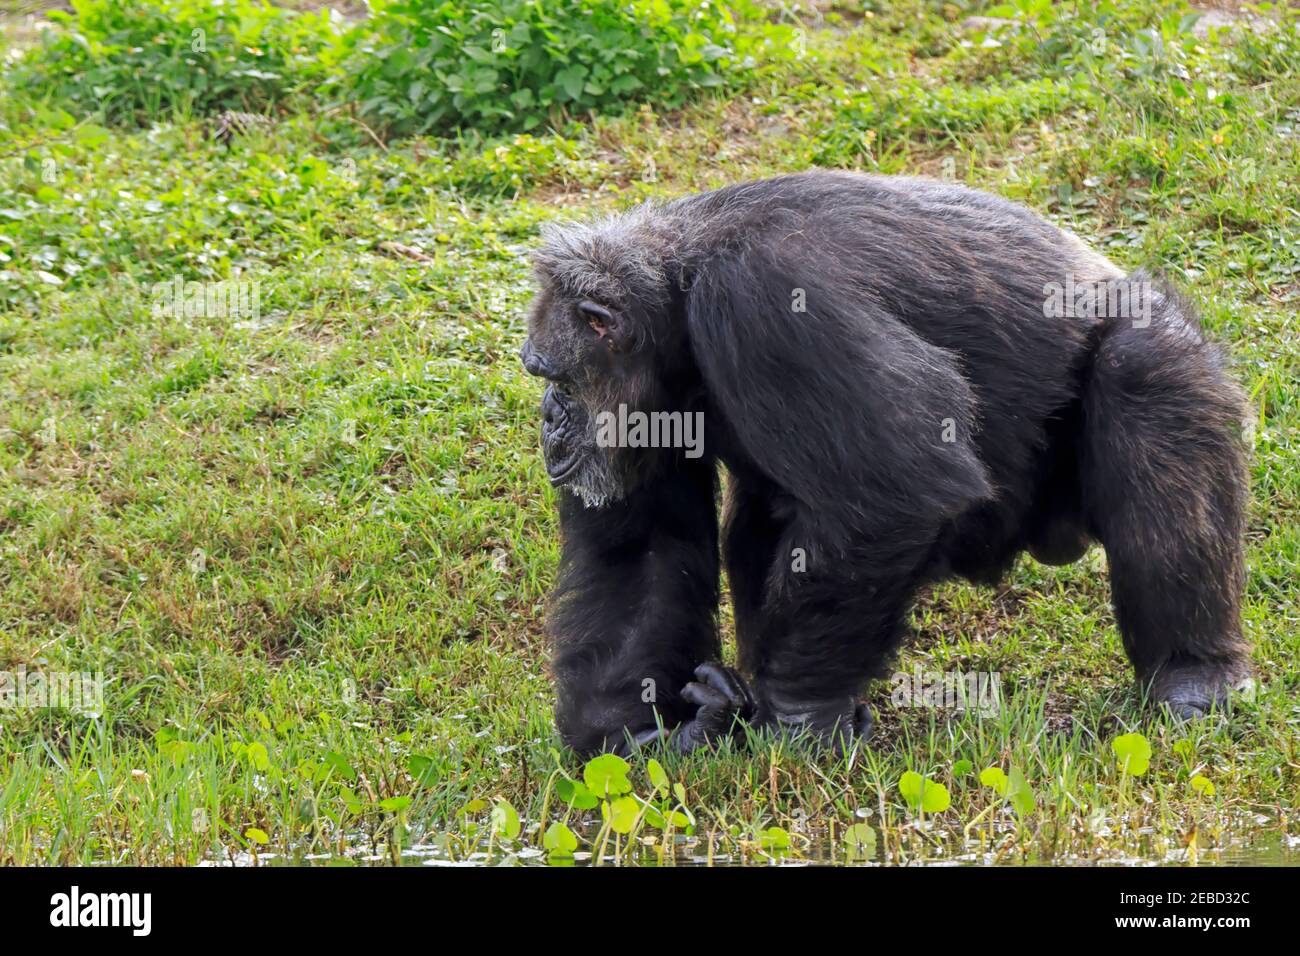 Common chimpanzee, Pan troglodytes, male Stock Photo